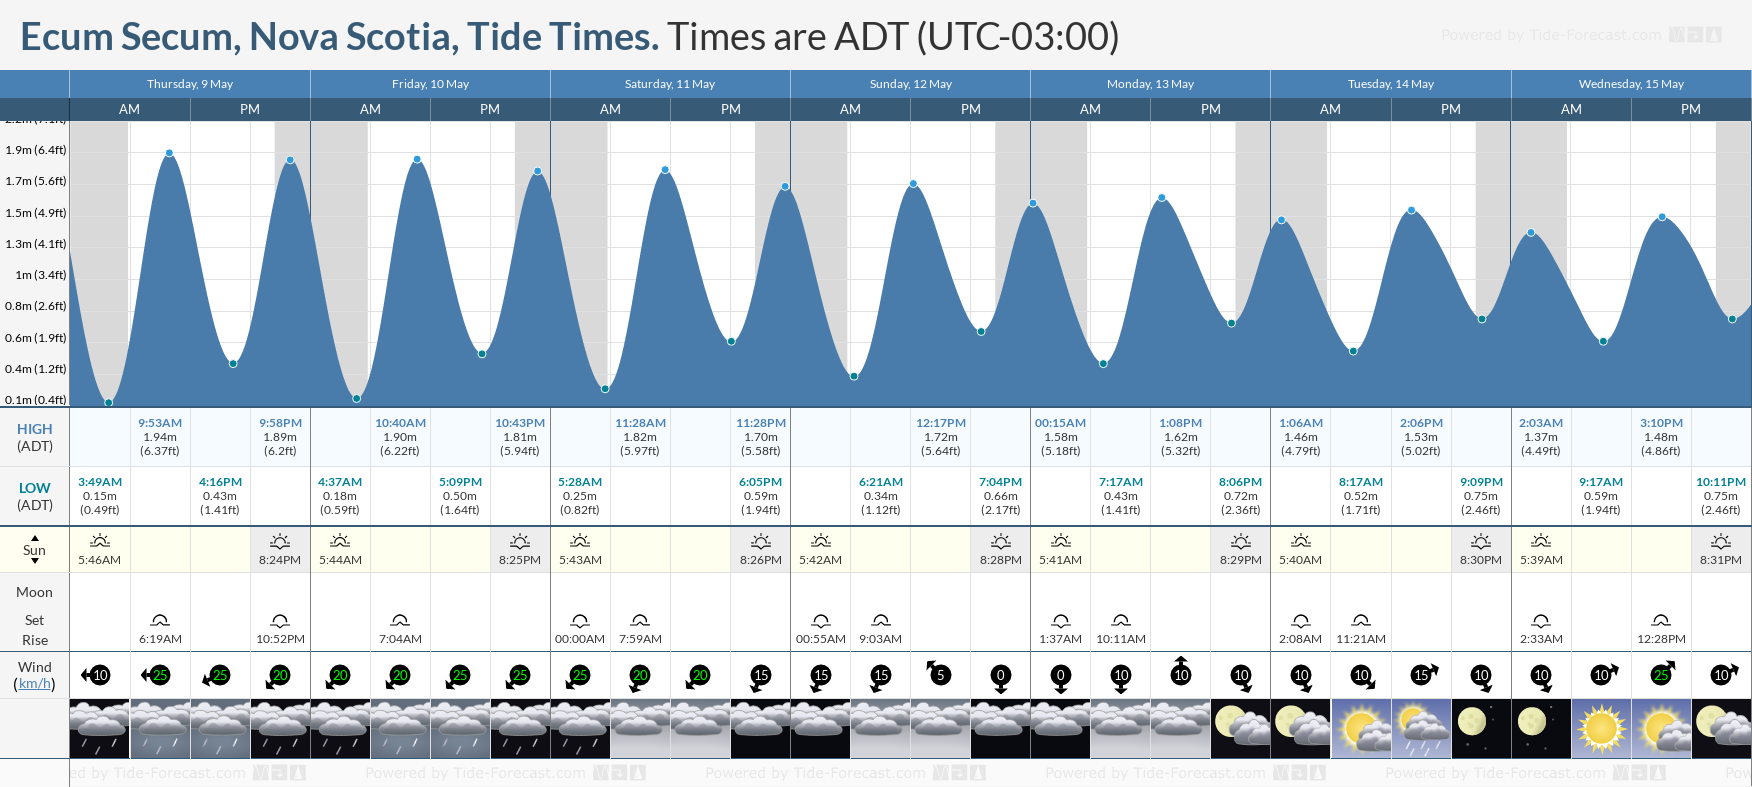 Ecum Secum, Nova Scotia Tide Chart including high and low tide tide times for the next 7 days